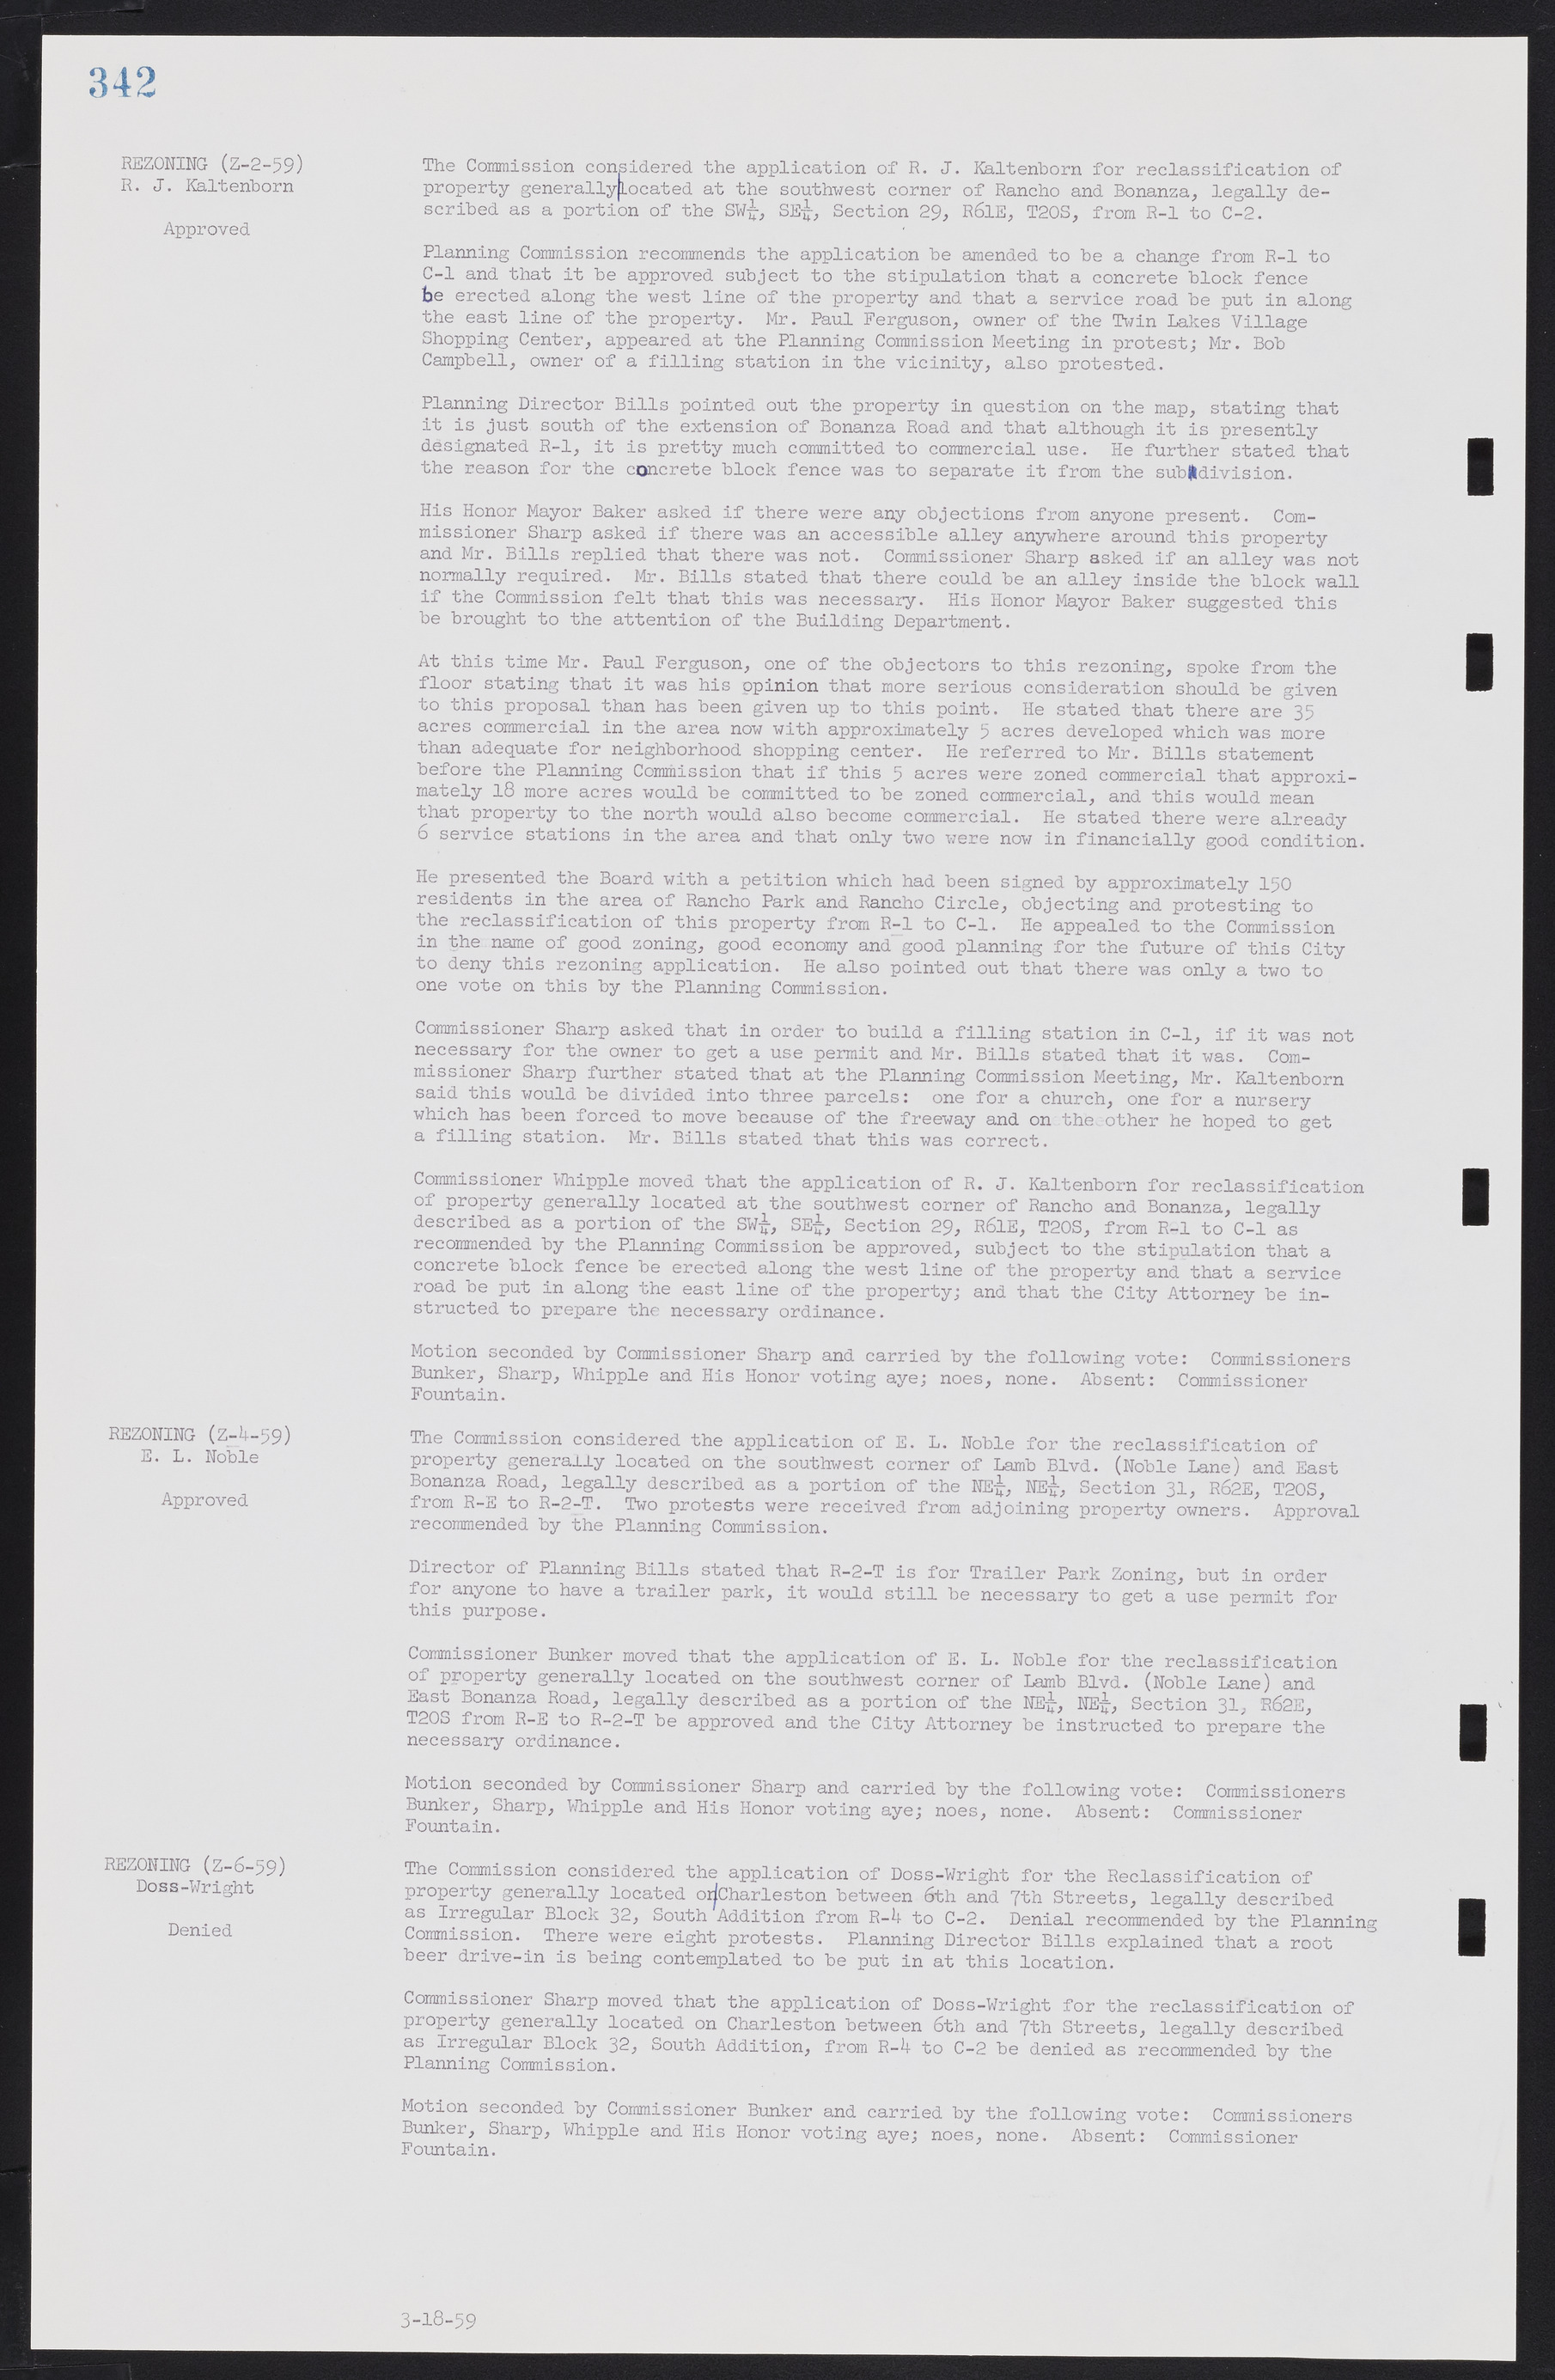 Las Vegas City Commission Minutes, November 20, 1957 to December 2, 1959, lvc000011-350